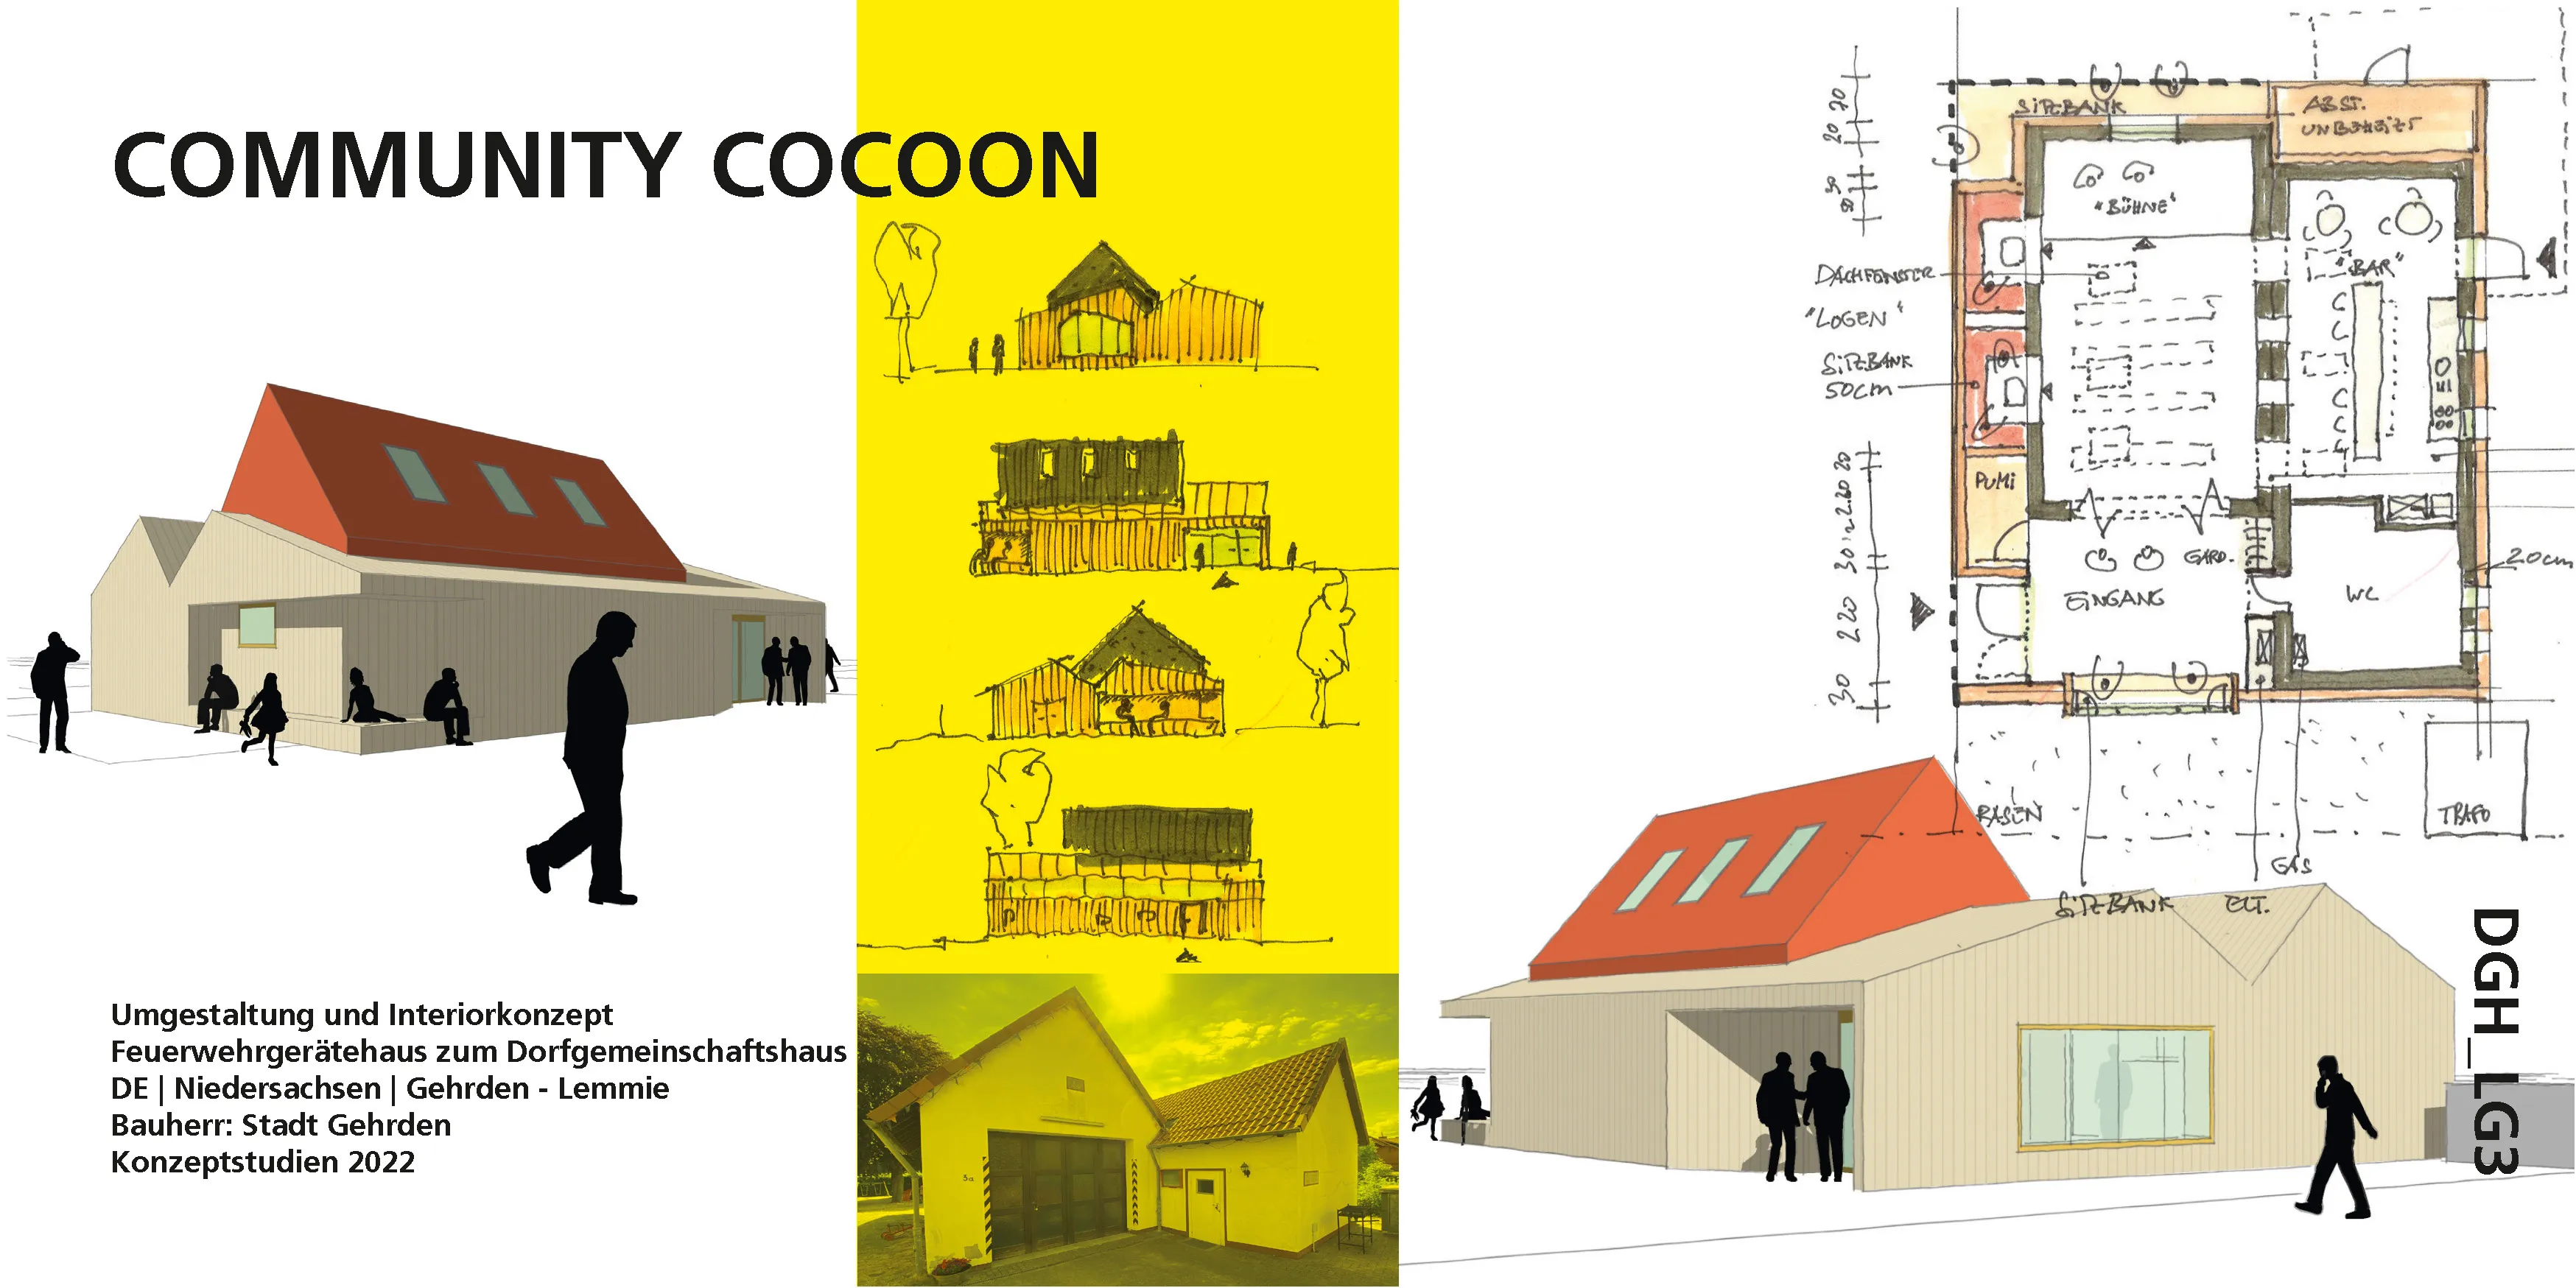 Community Cocoon